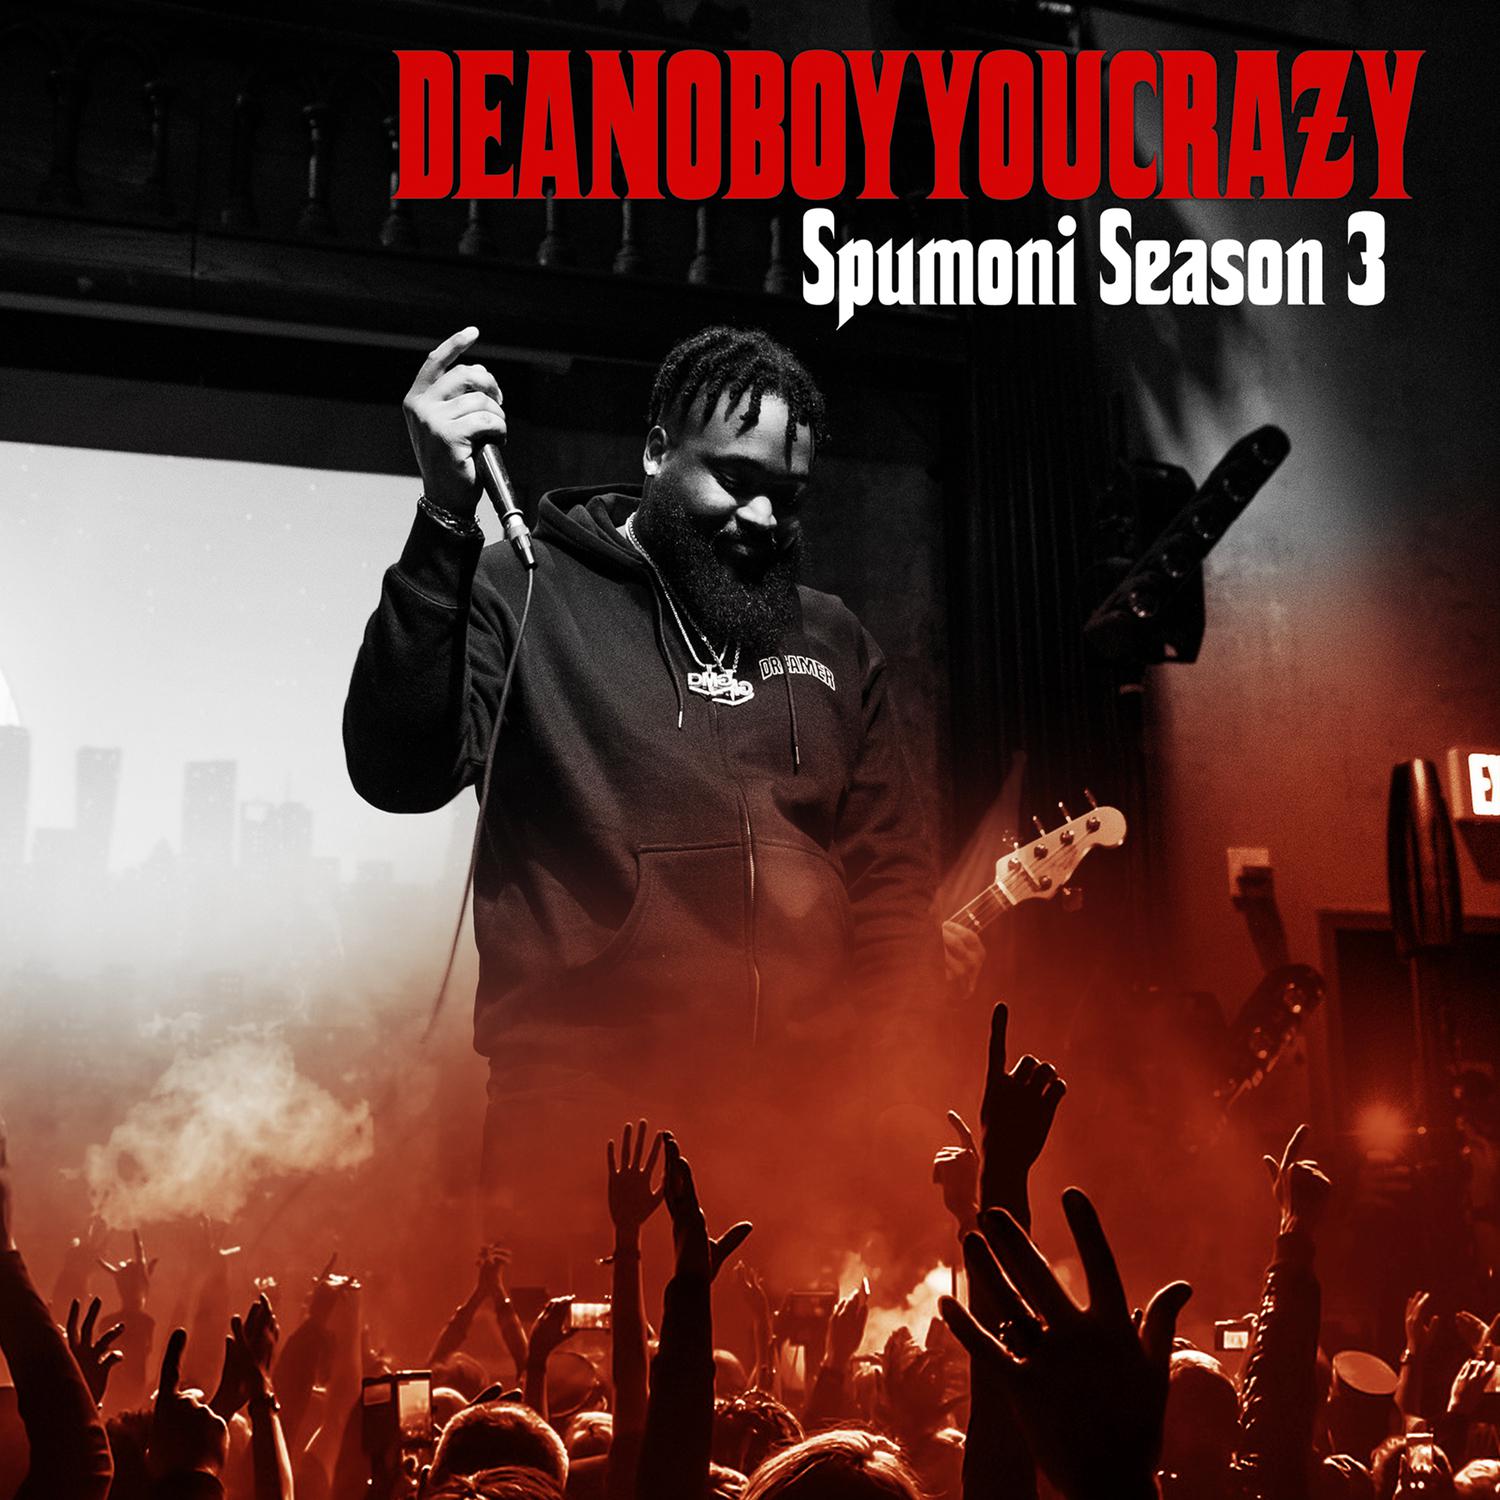 Deanoboyyoucrazy - The Deal